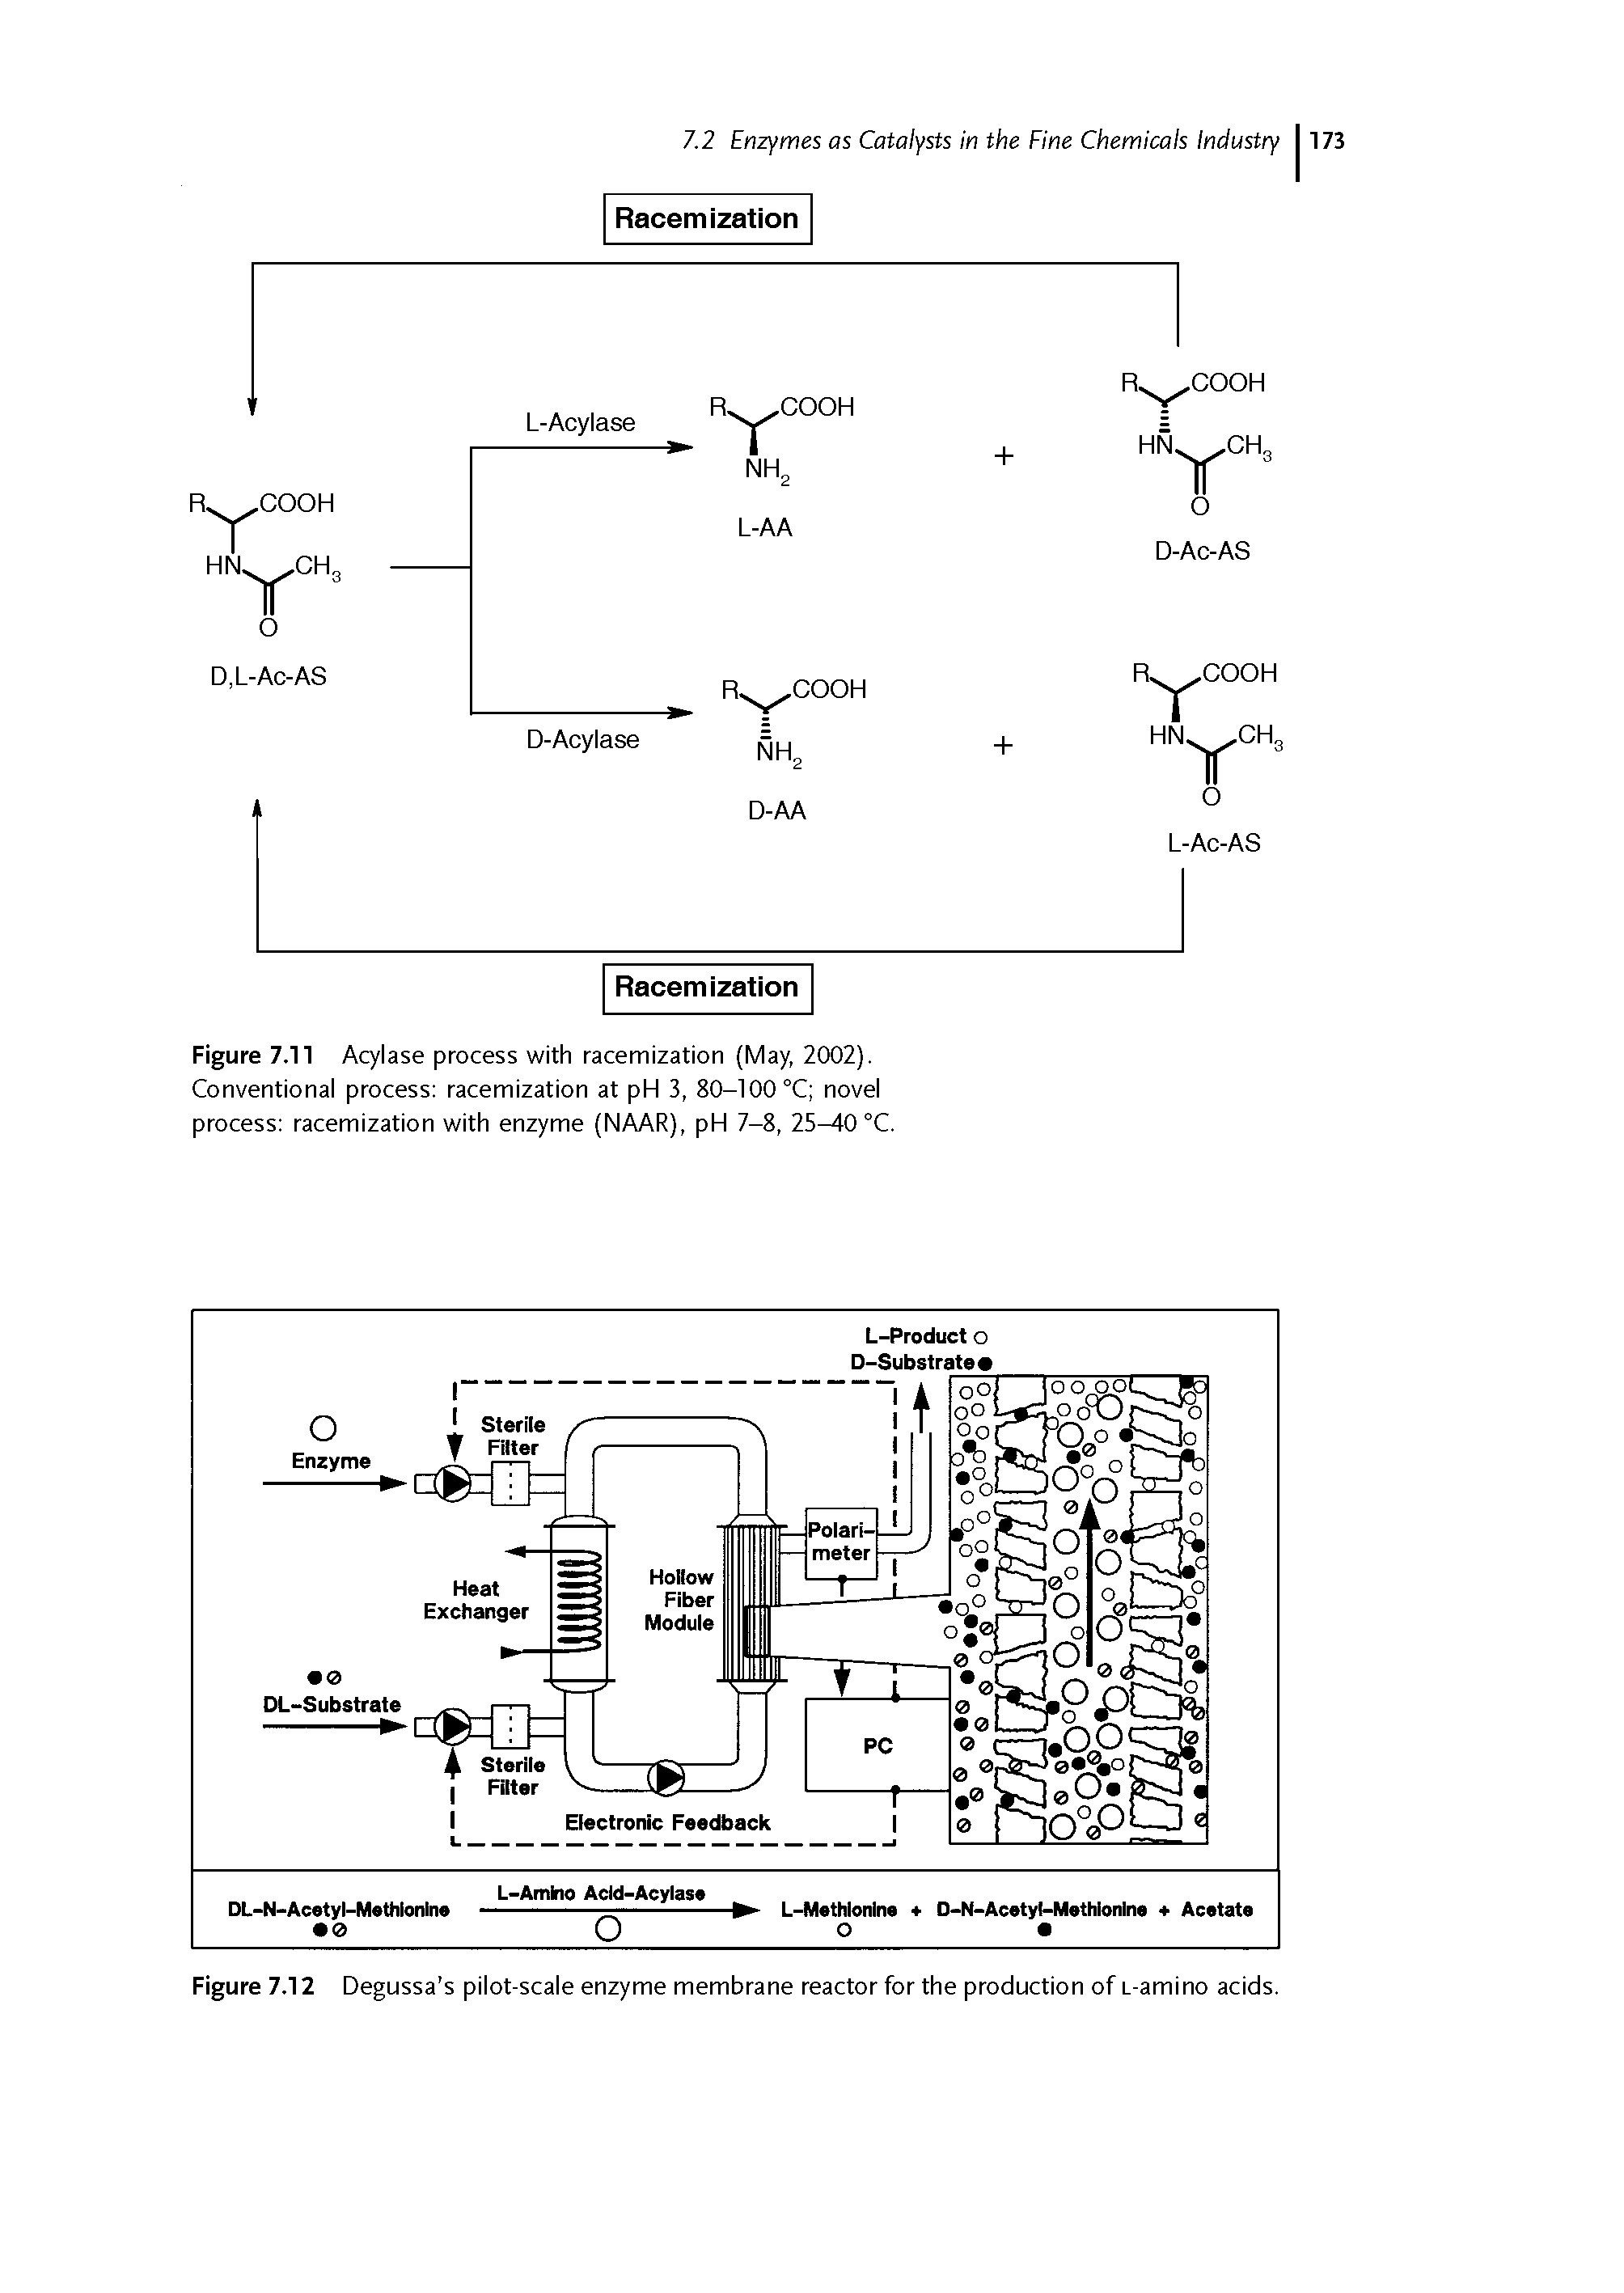 Figure 7.11 Acylase process with racemization (May, 2002). Conventional process racemization at pH 3, 80-100 °C novel process racemization with enzyme (NAAR), pH 7-8, 25 10 °C.